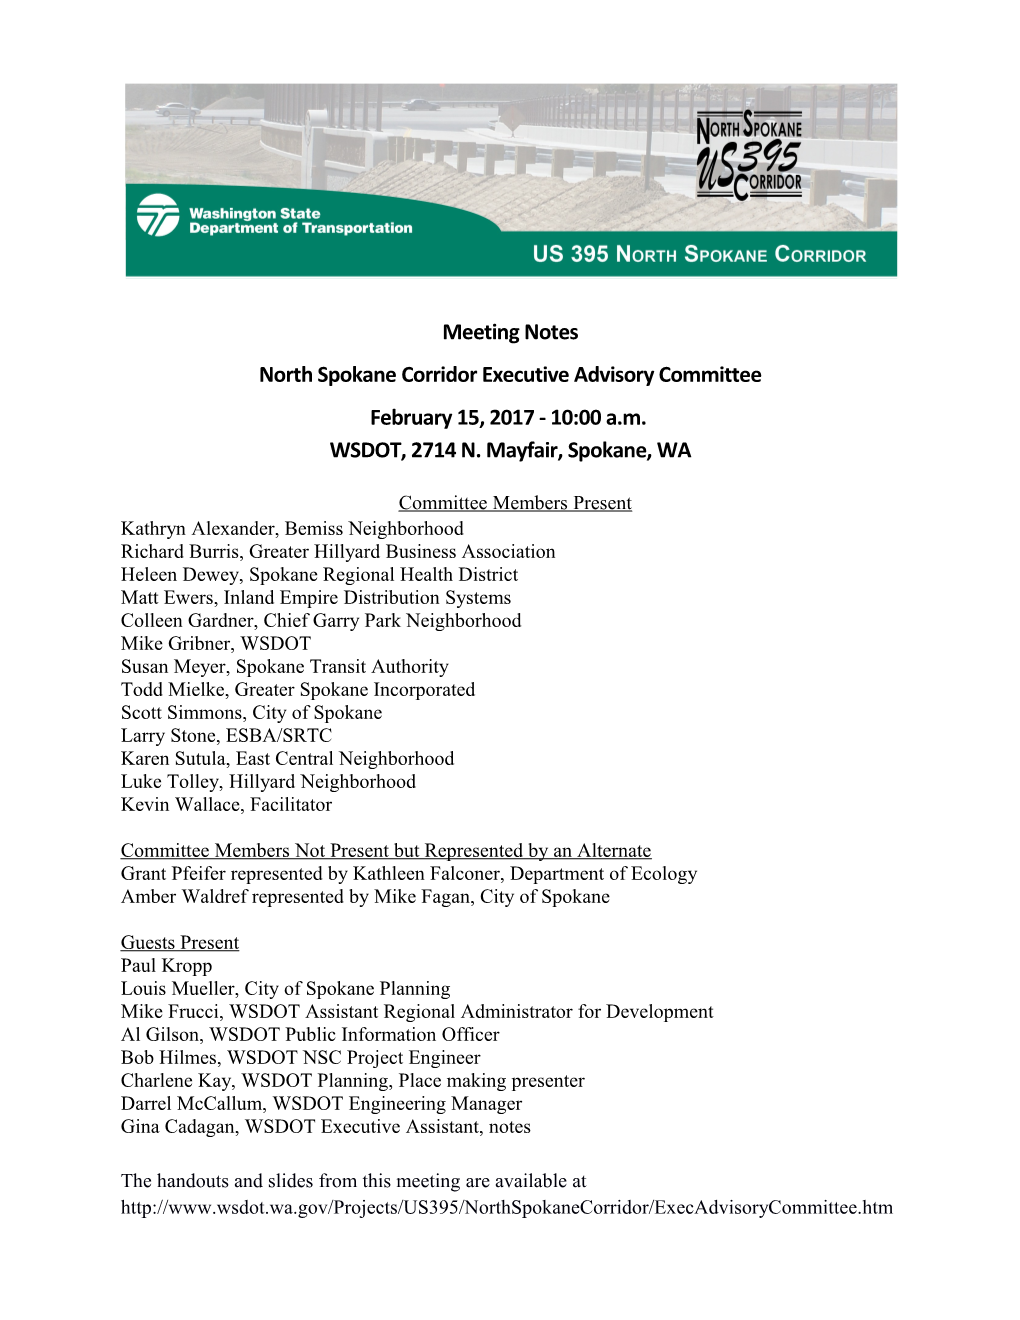 North Spokane Corridorexecutive Advisory Committee